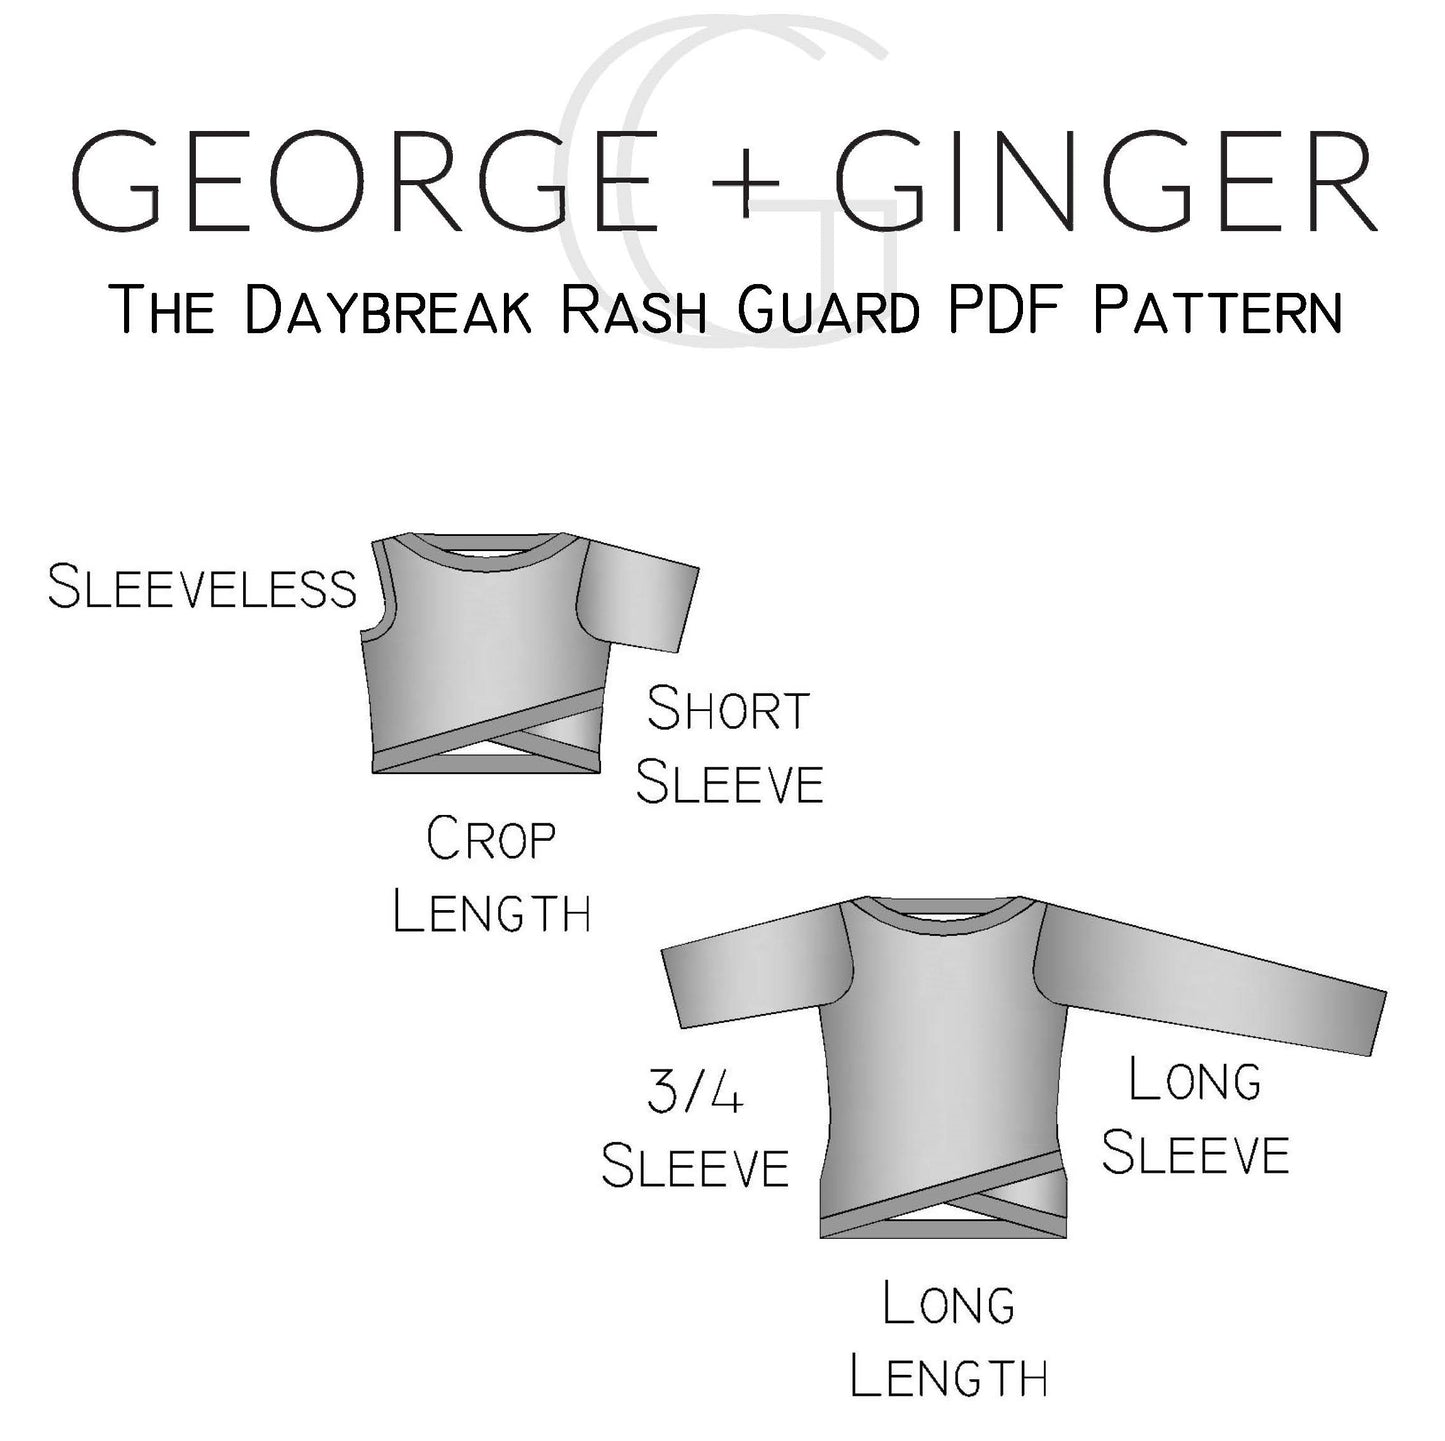 The Daybreak Rash Guard PDF Sewing Pattern